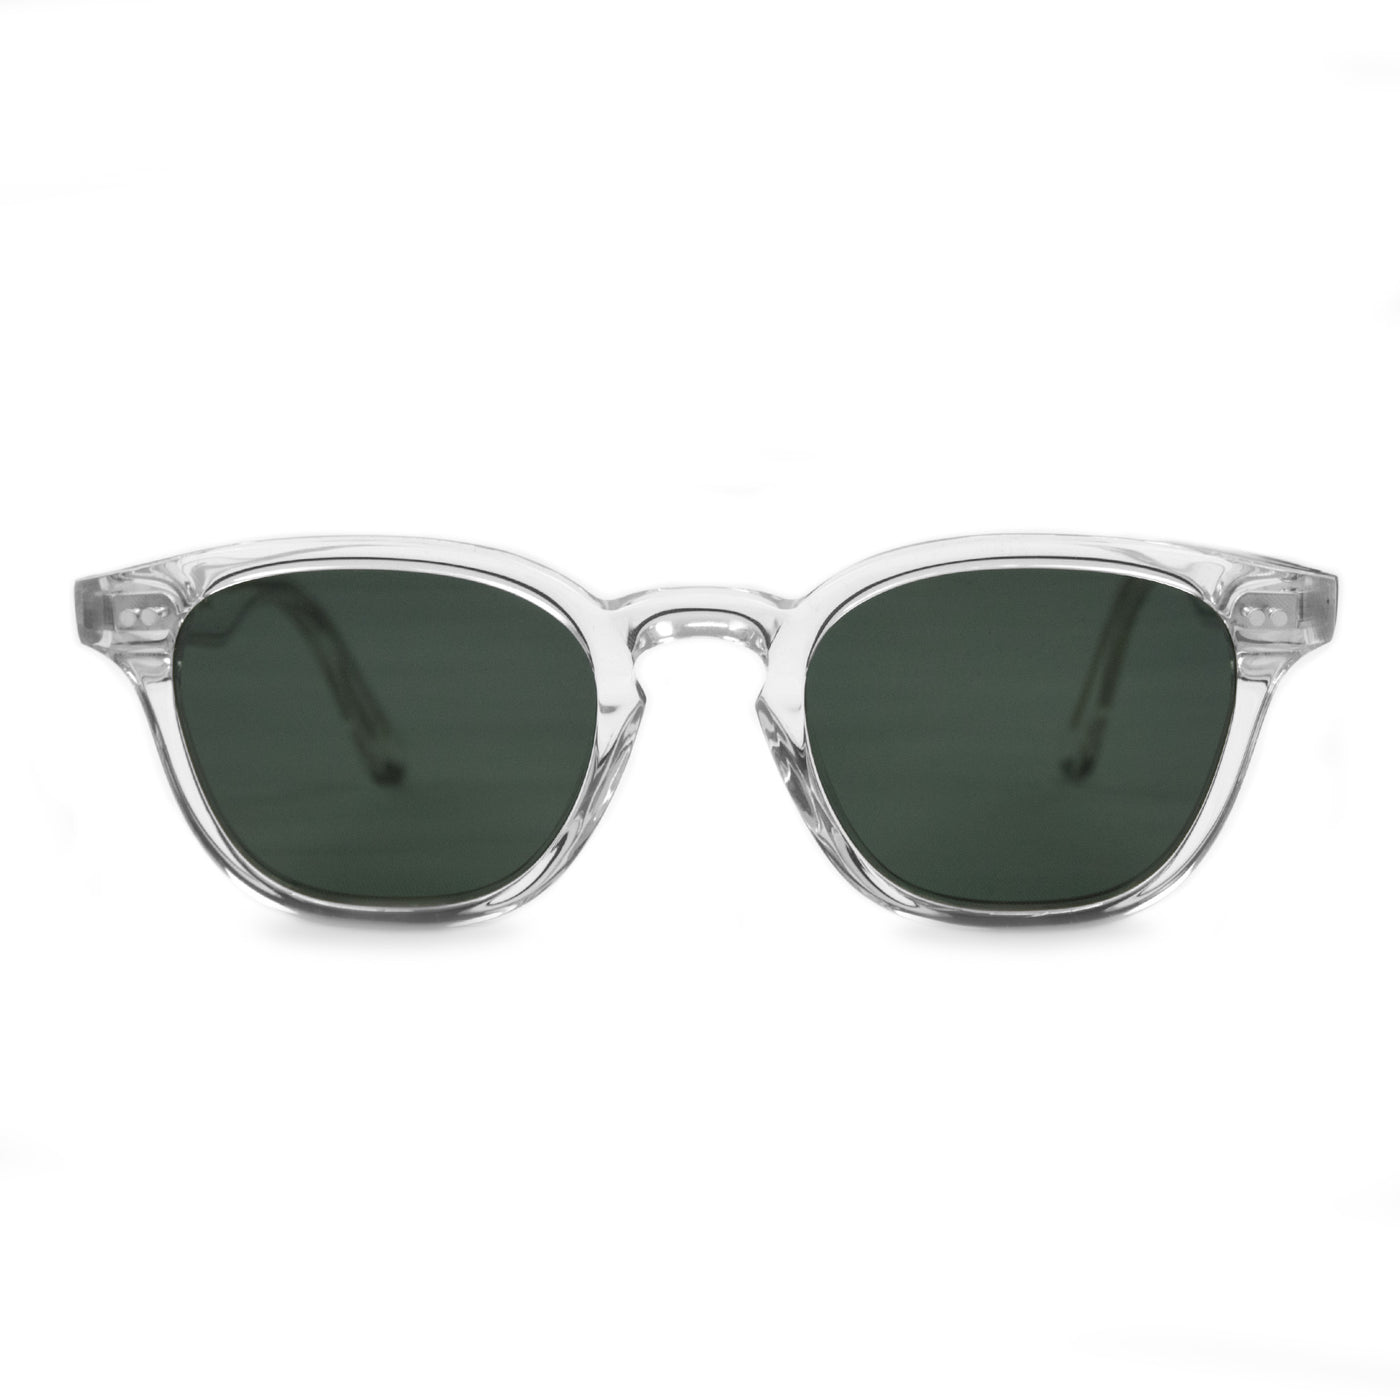 Monokel River Crystal Sunglasses Green Solid Lens FRONT